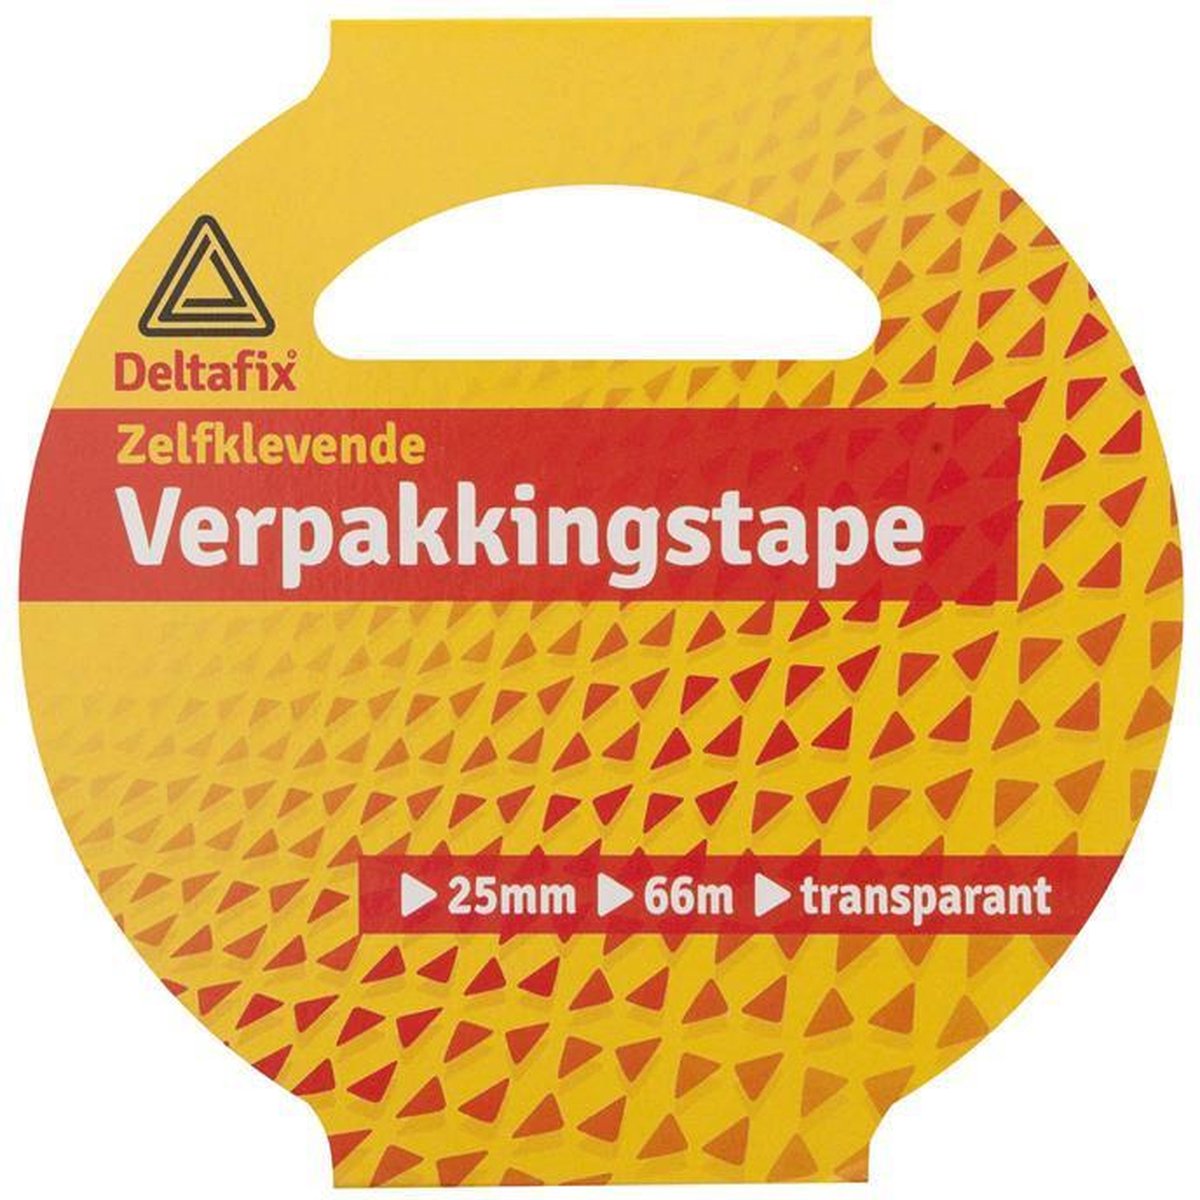 Deltafix verpakkingstape zelklevend pp in huls transparant 66 m x 25 mm - Deltafix